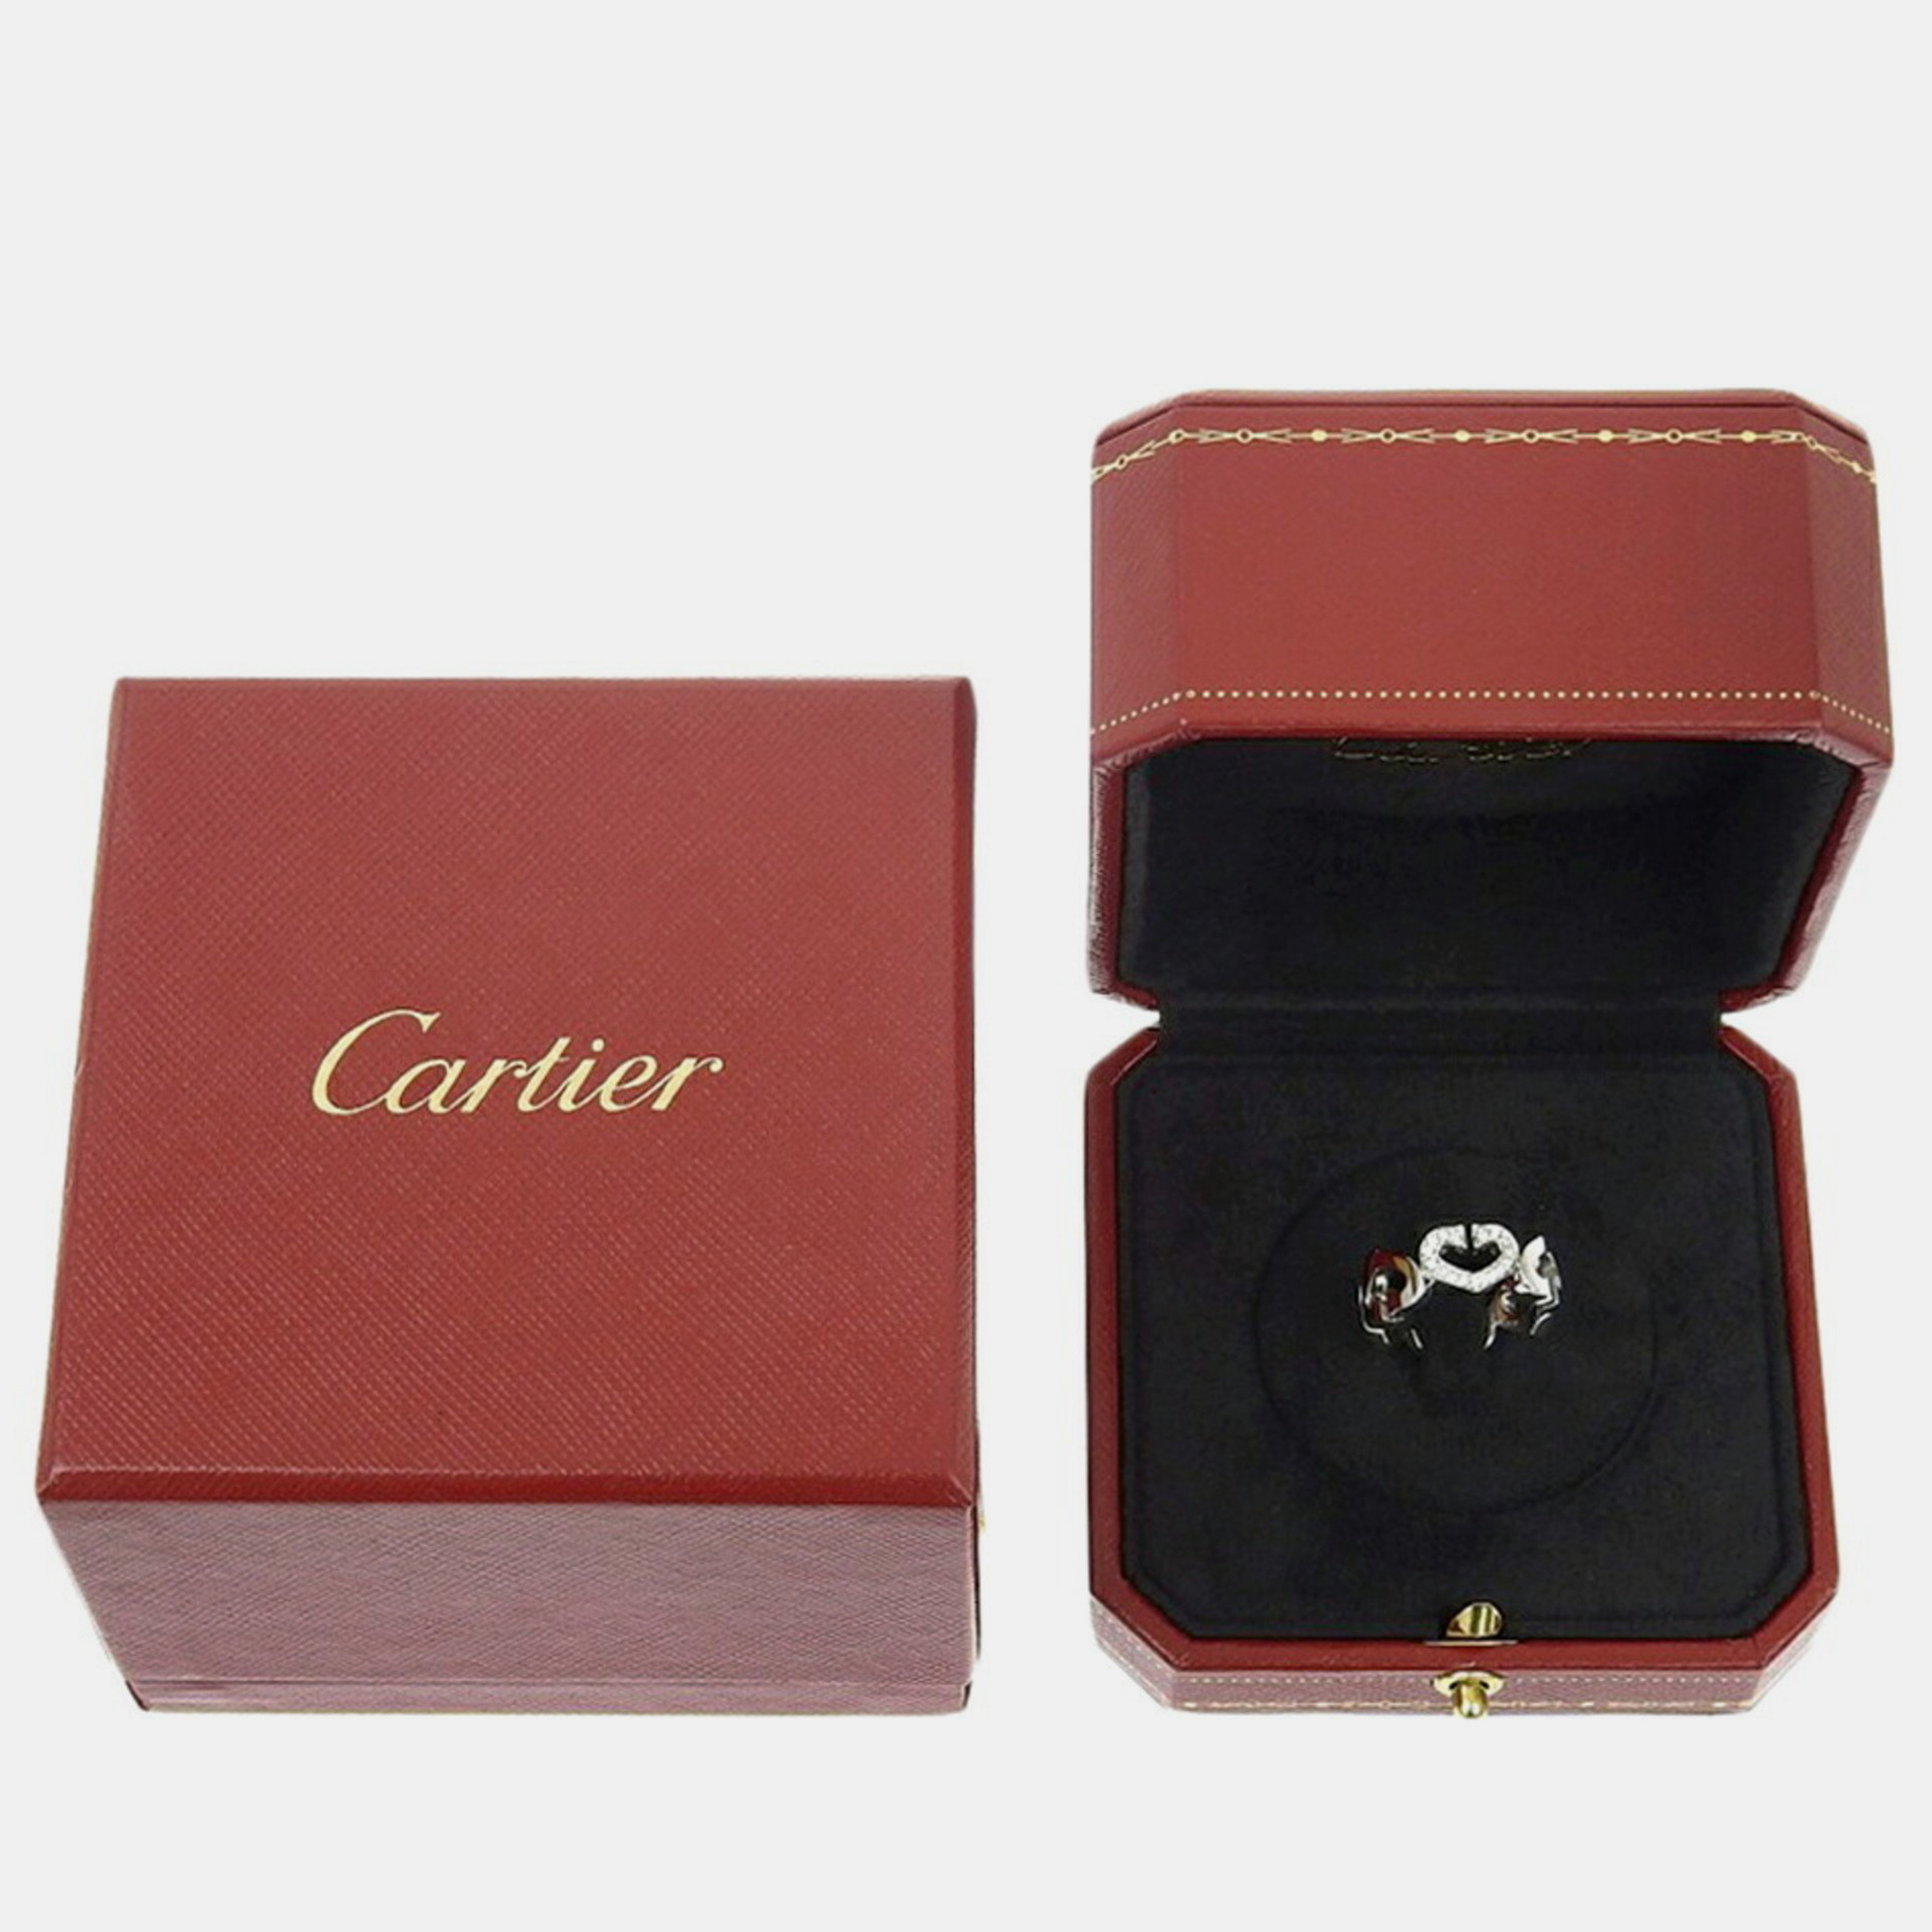 Cartier Heart C 18K White Gold Diamond Ring EU 49